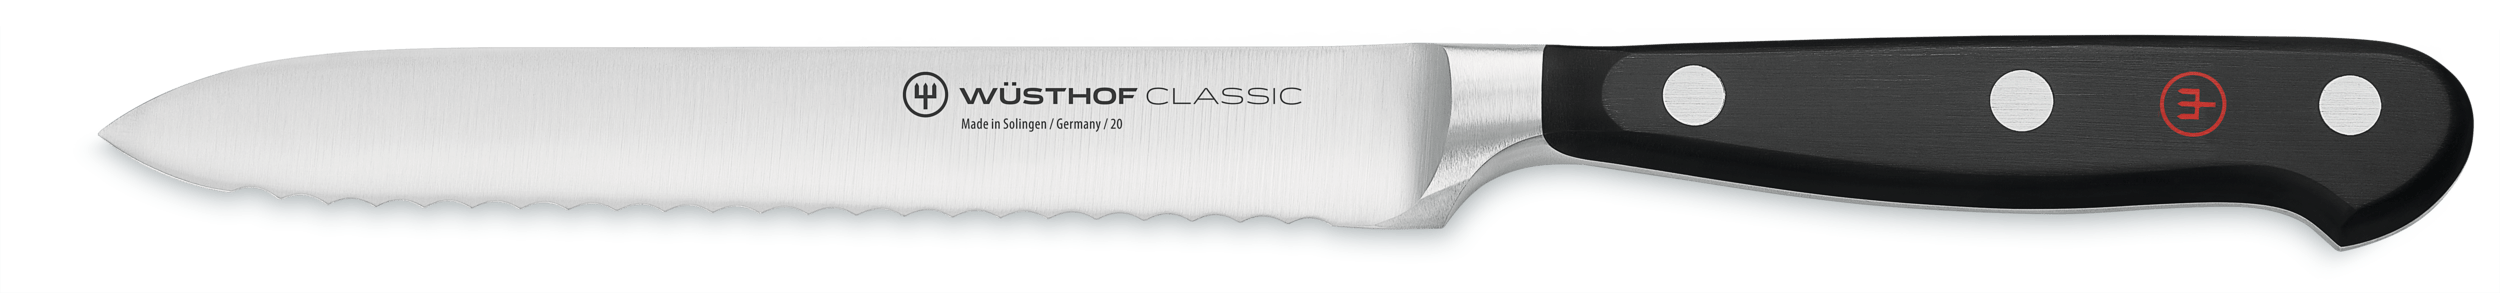 Wusthof Classic Sausage Knife 14cm 1040101614